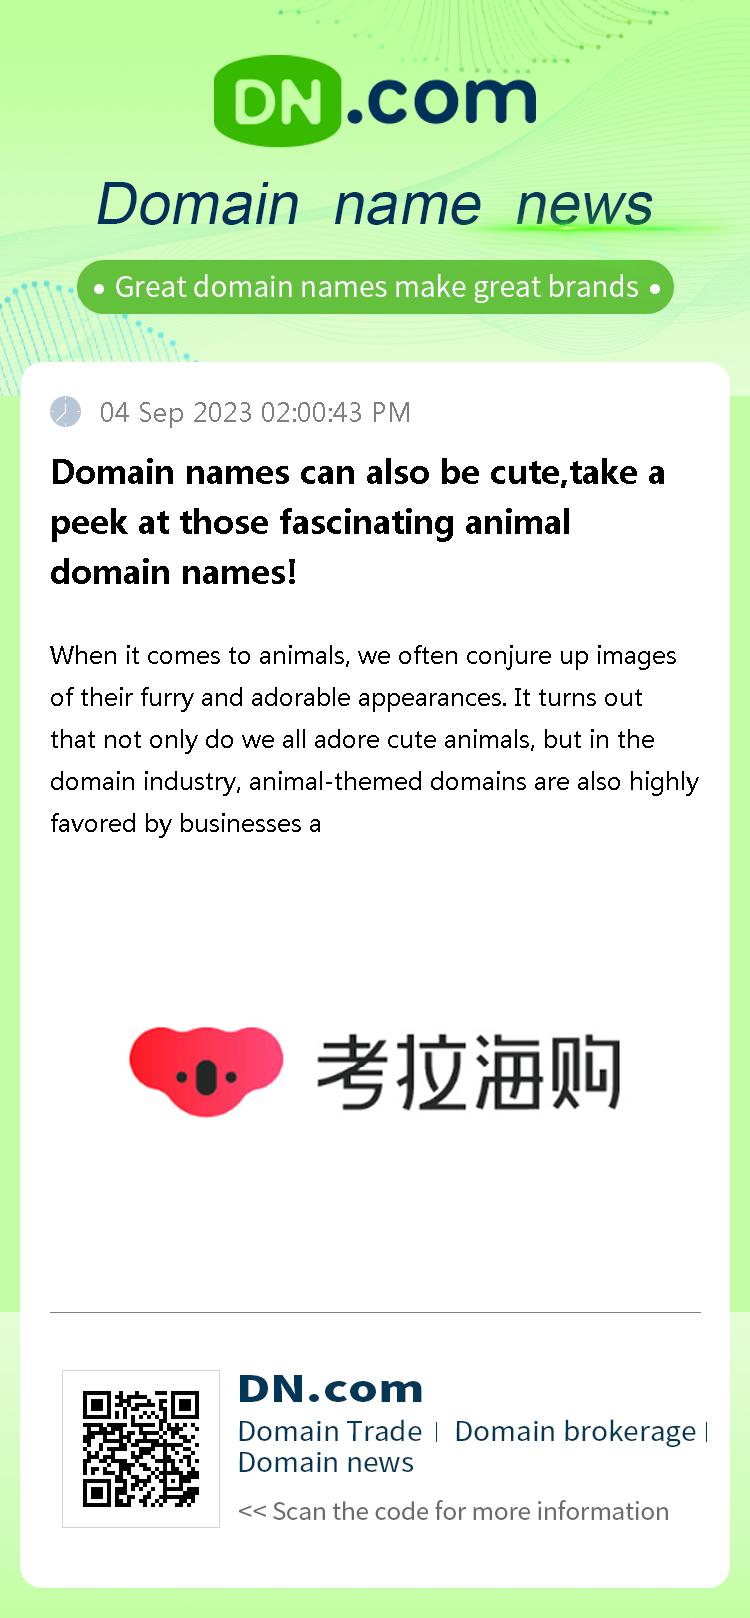 Domain names can also be cute,take a peek at those fascinating animal domain names!